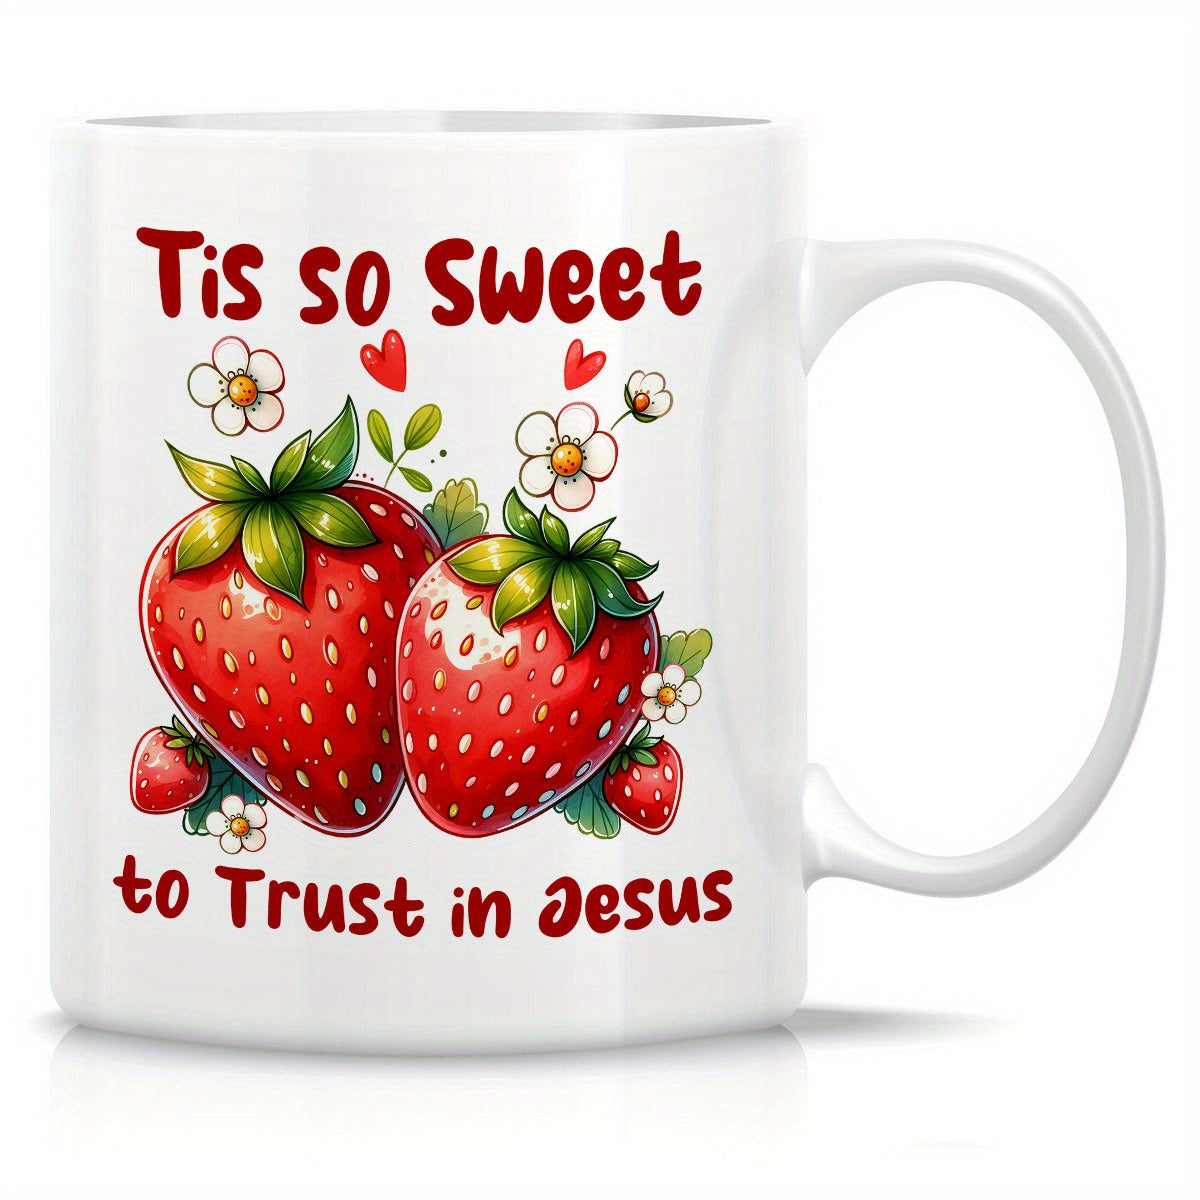 Tis So Sweet To Trust In Jesus Christian White Ceramic Mug 11oz Double Side Print claimedbygoddesigns